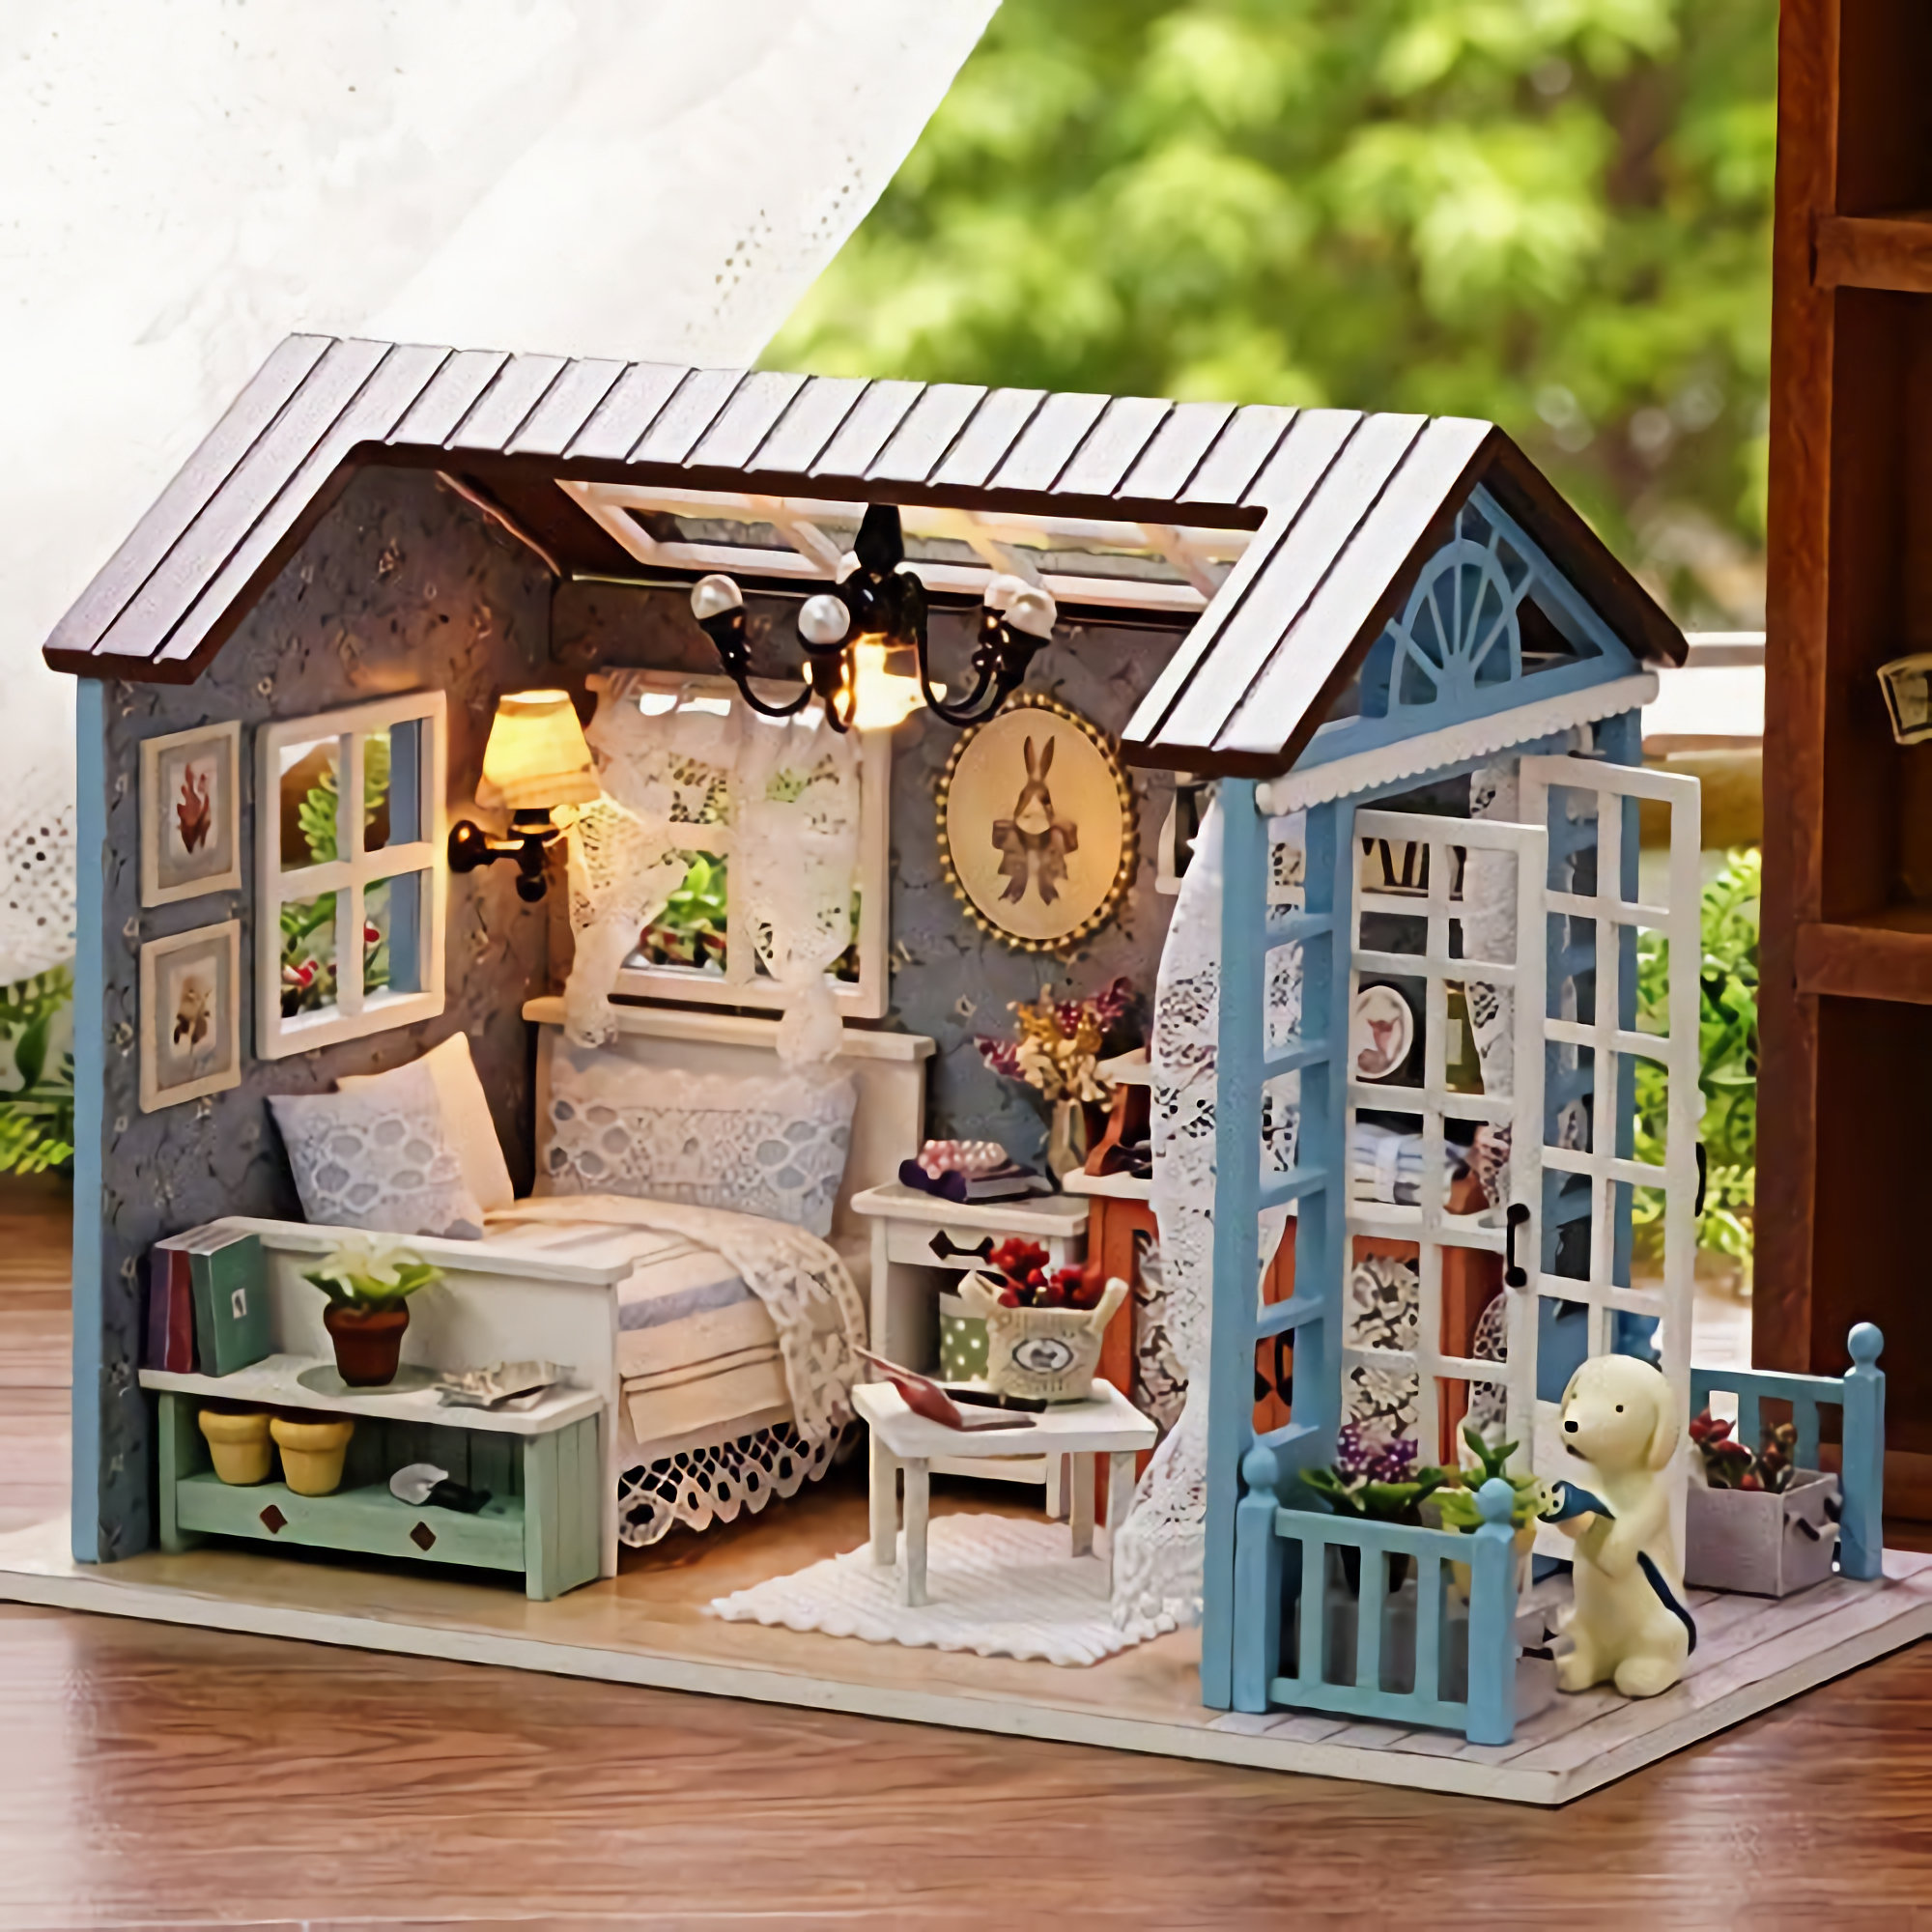 Dollhouse Miniature Bathroom Toilet Model DIY Sand Table Landscape Scene Toys S! 